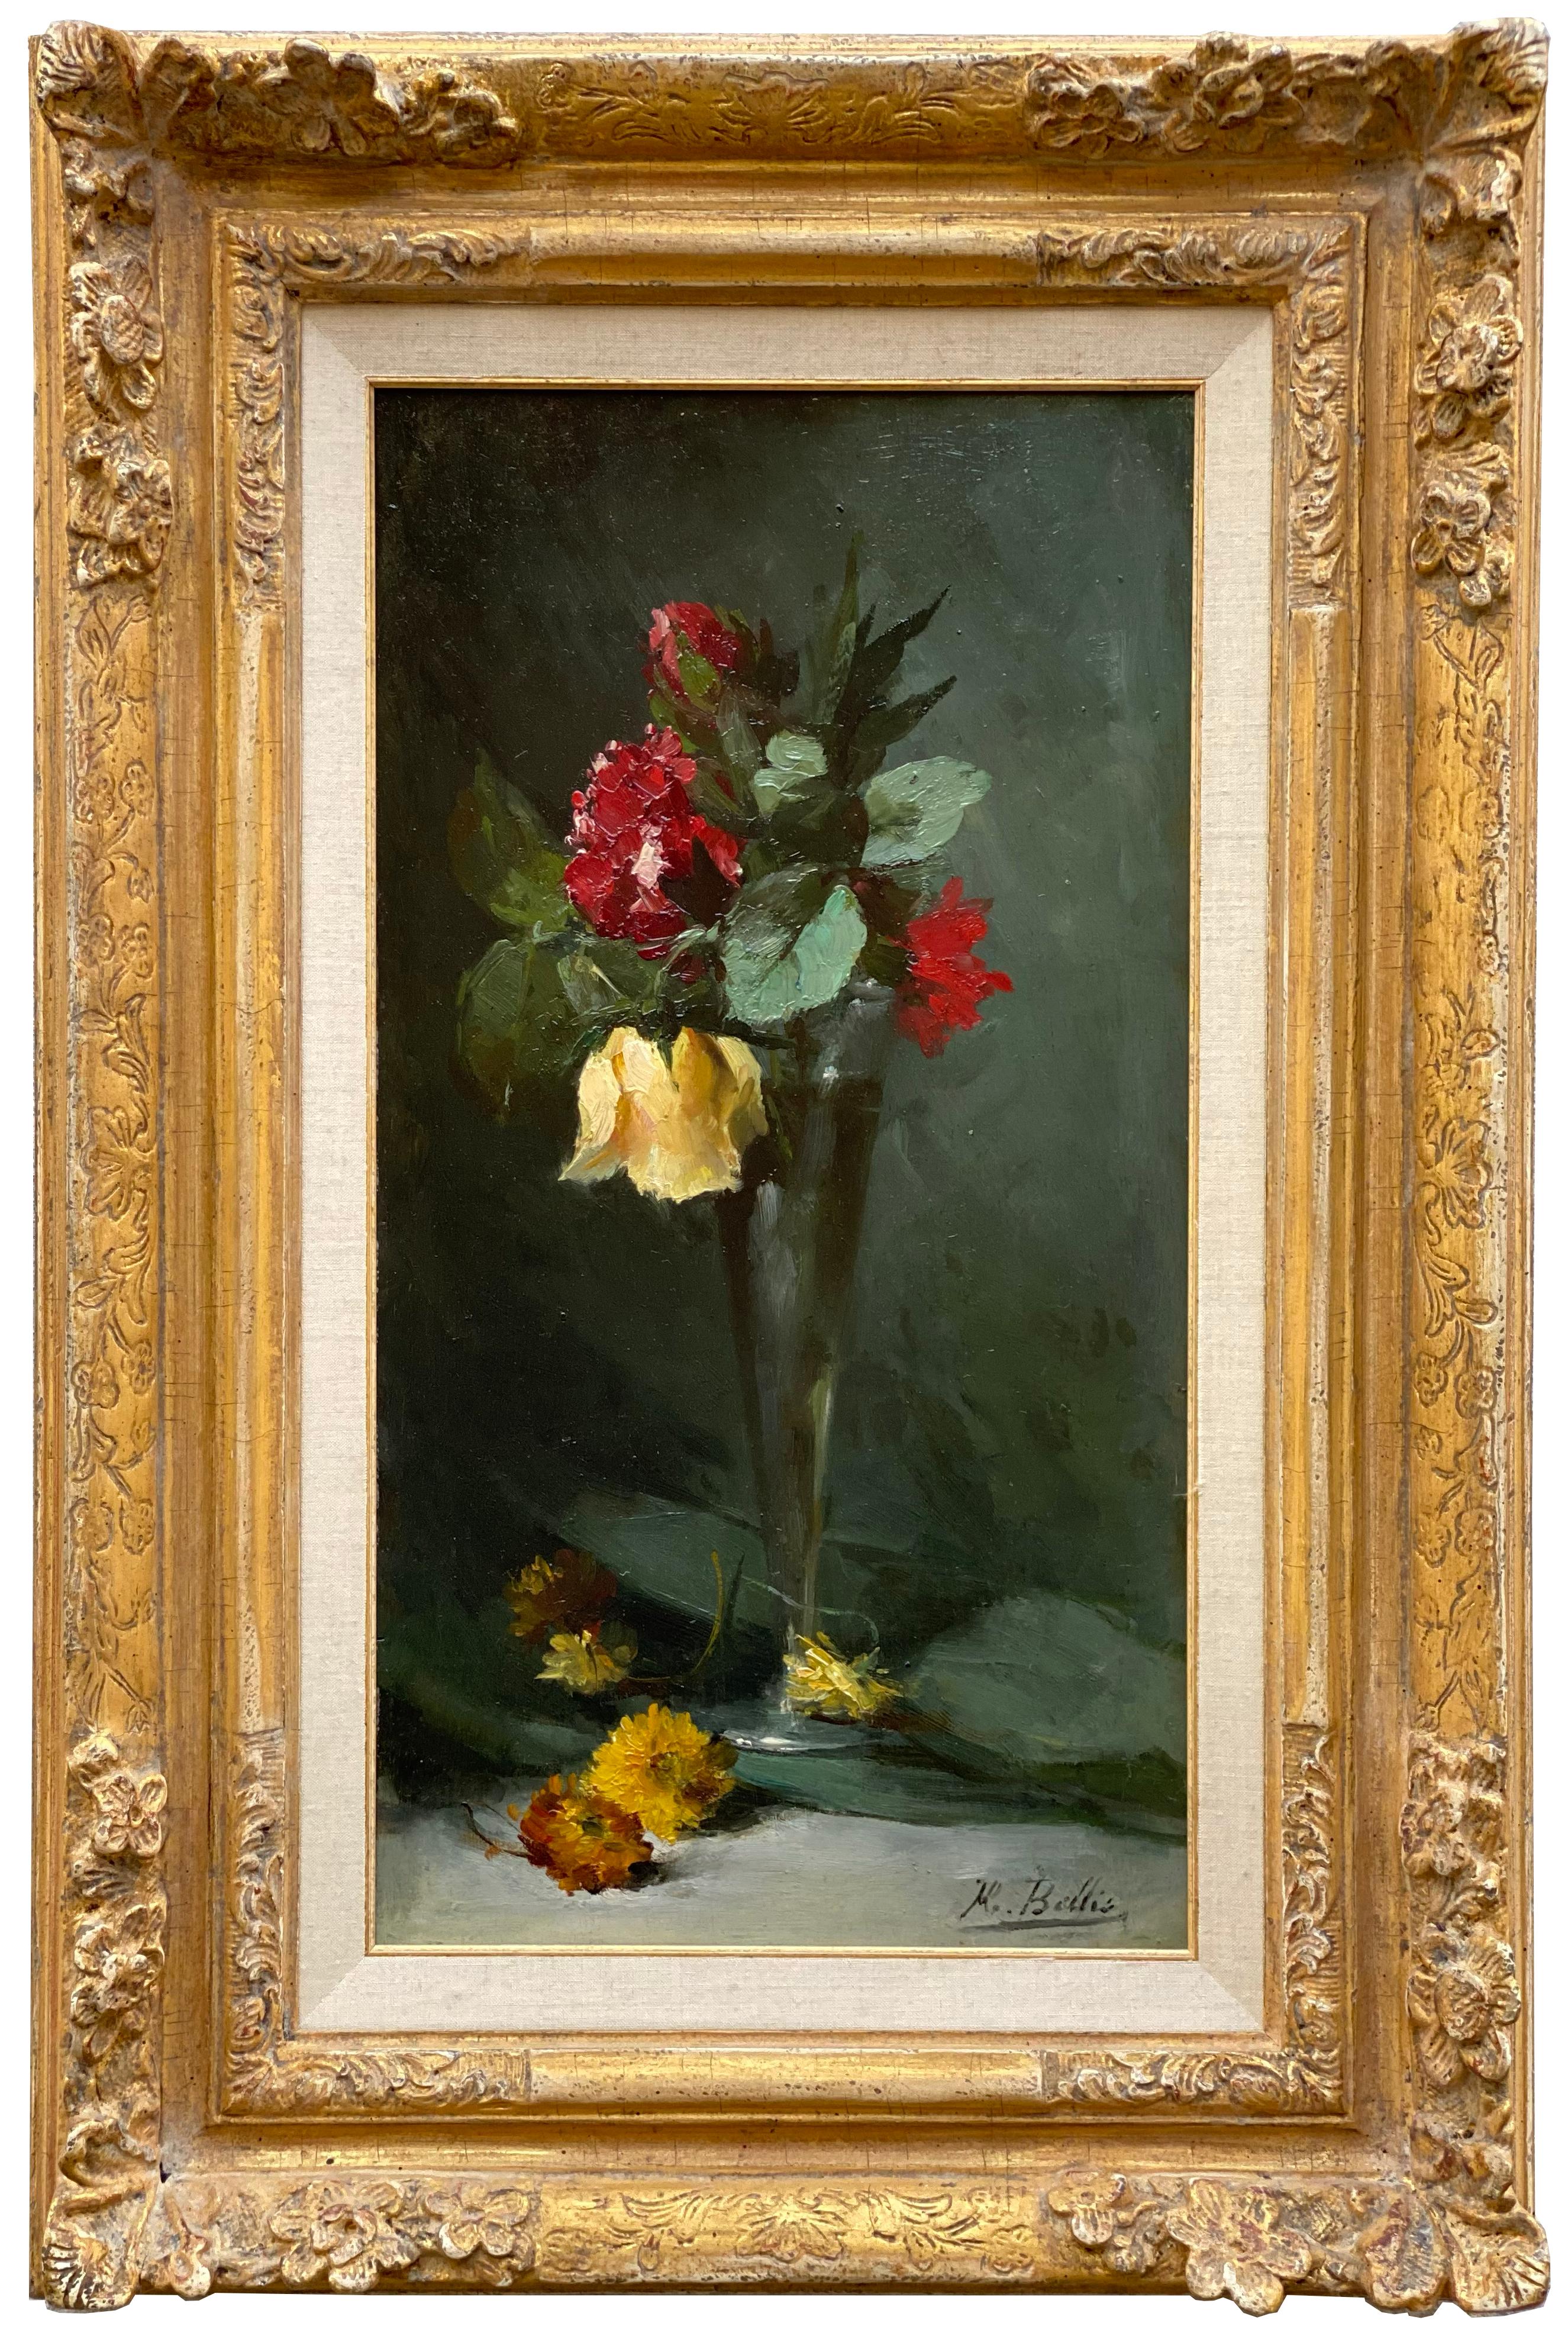 Figurative Painting HUBERT BELLIS -   Hubert BELLIS, Bruxelles 1831 - 1902, peintre belge, "Roses rouges et jaunes".